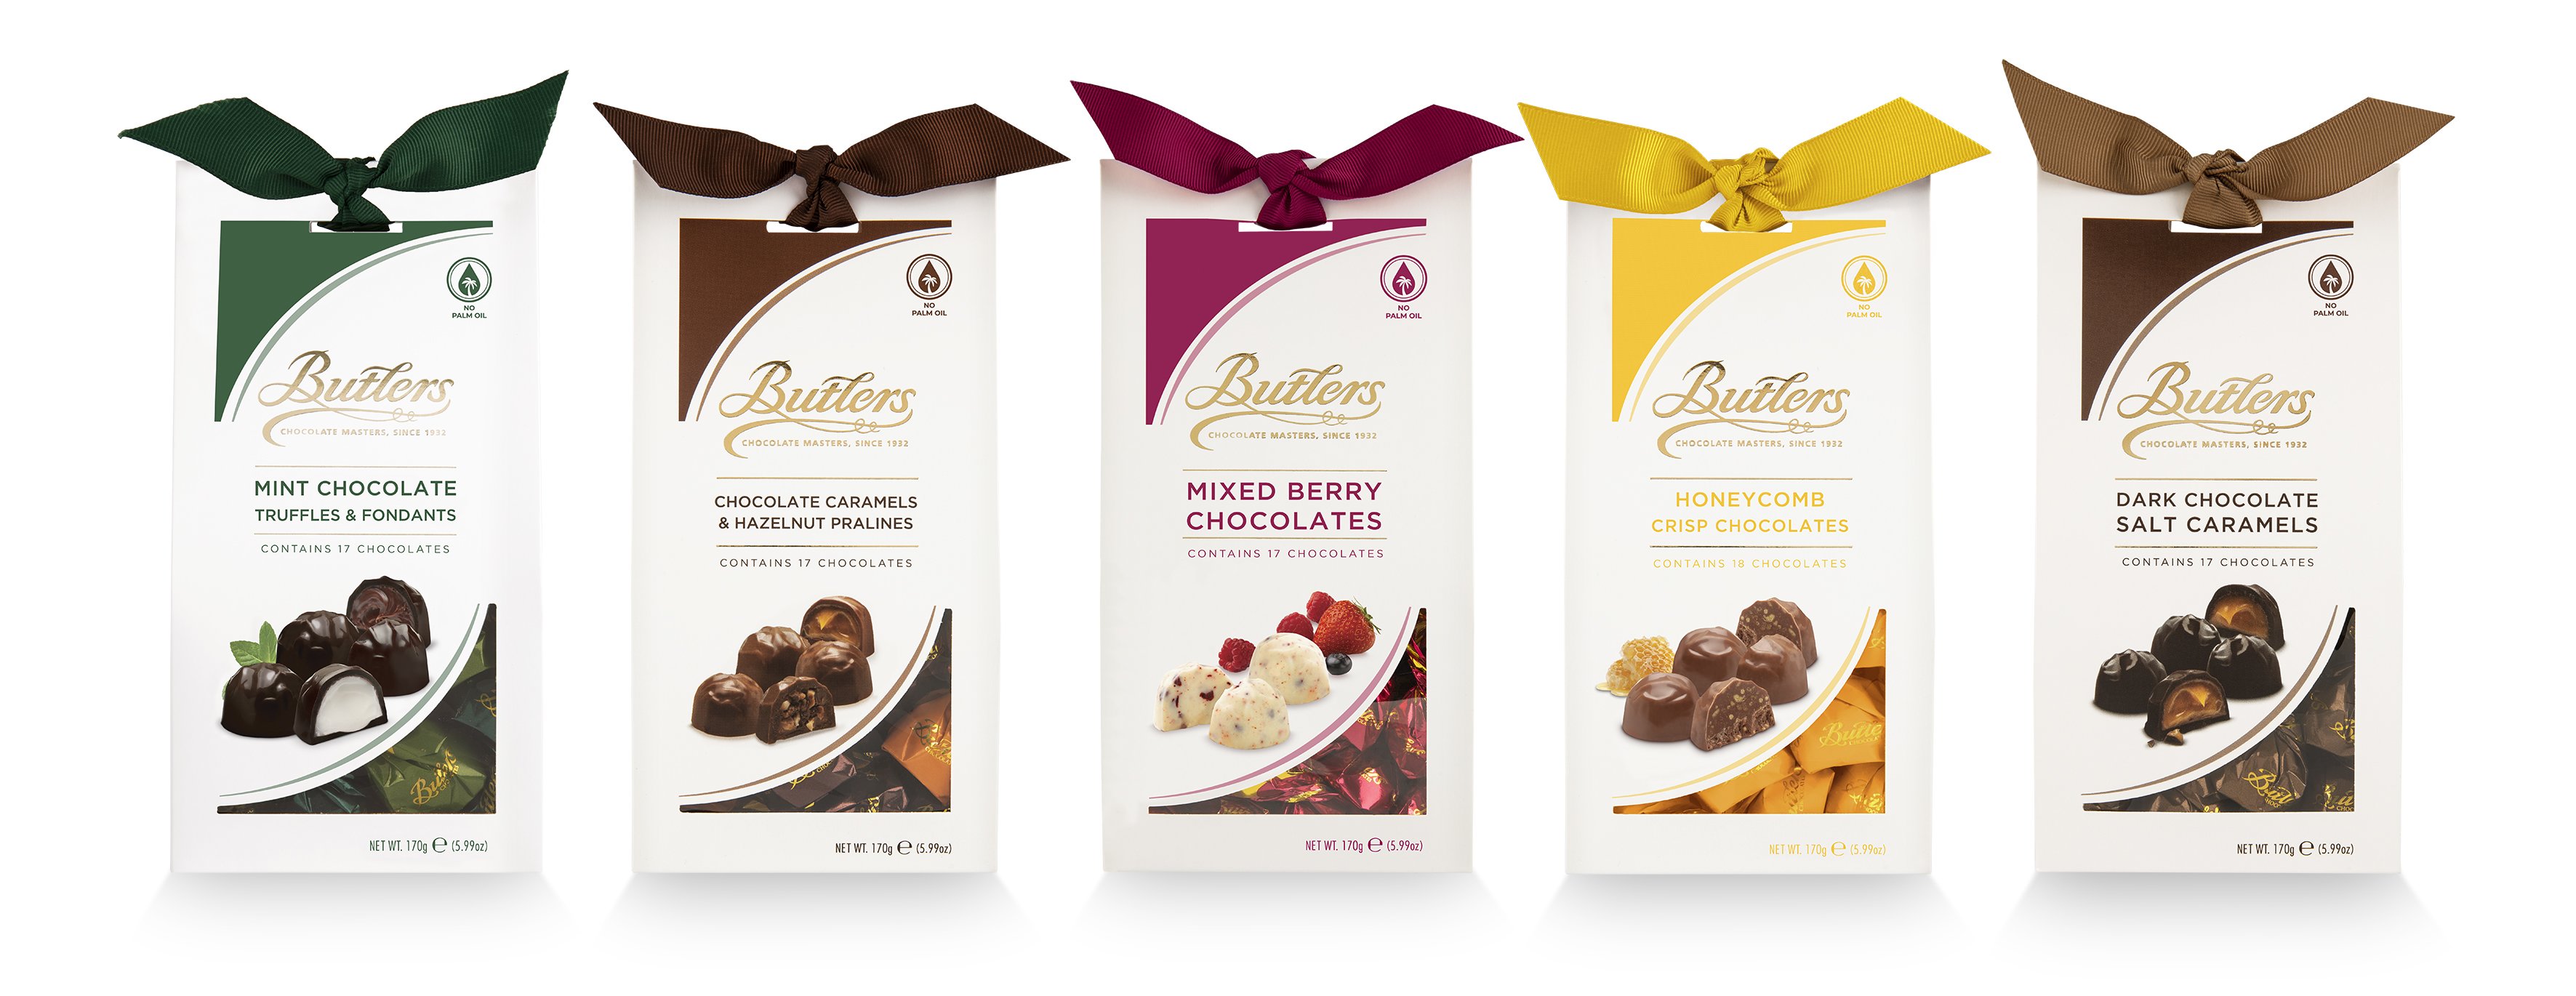 Butlers Chocolates Image